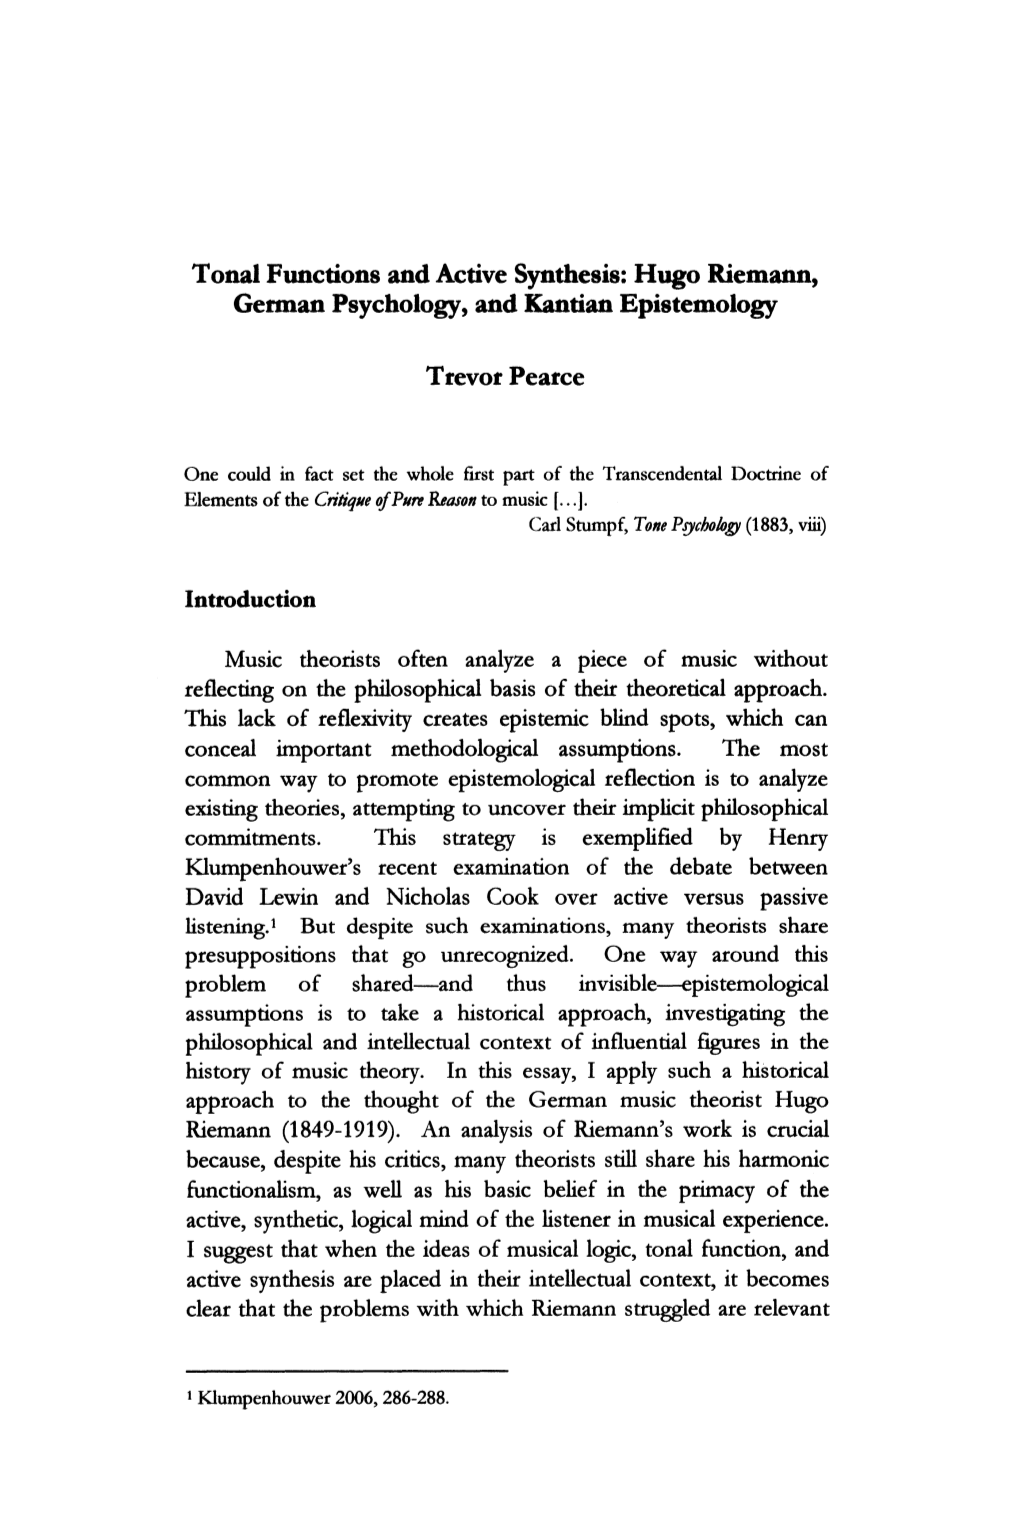 Hugo Riemann, German Psychology, and Kantian Epistemology